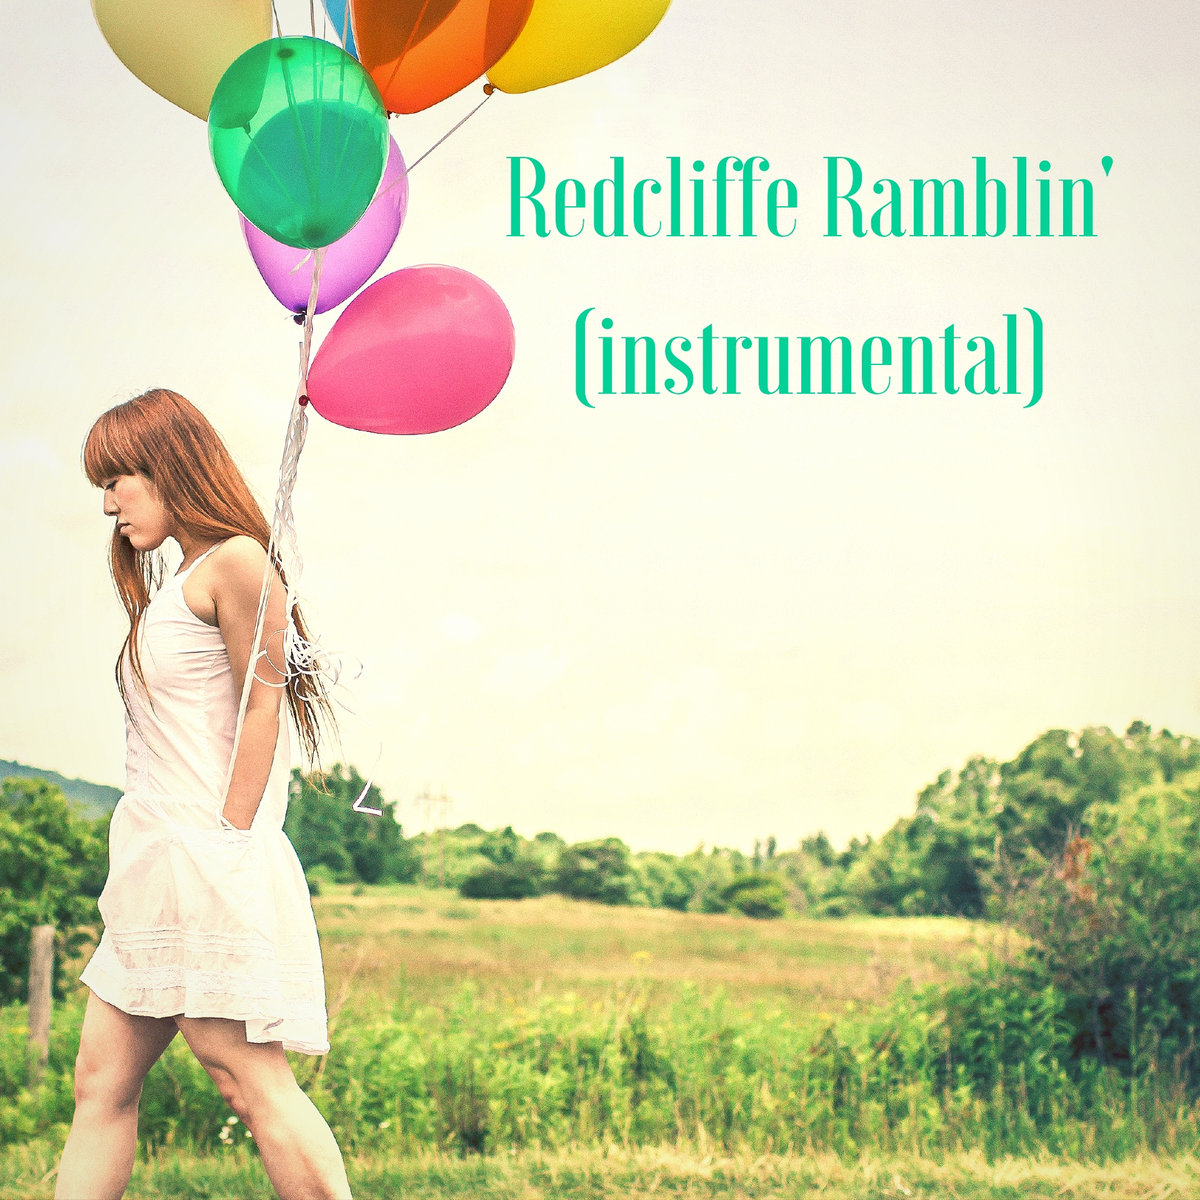 Redcliffe Ramblin' (instrumental)